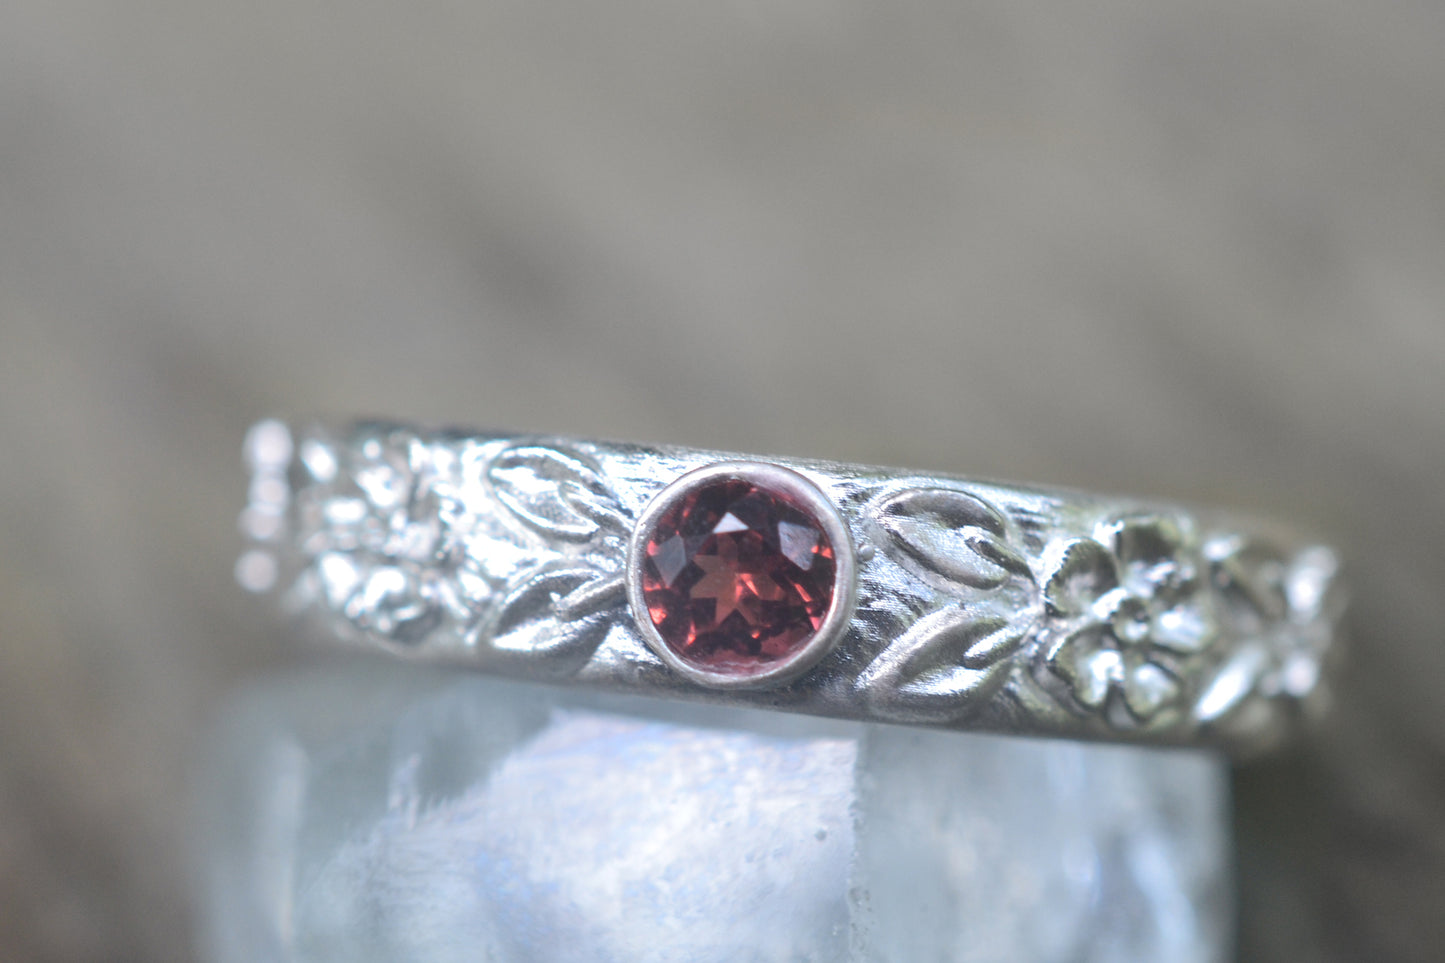 Rose Wedding Ring With Inset Red Garnet